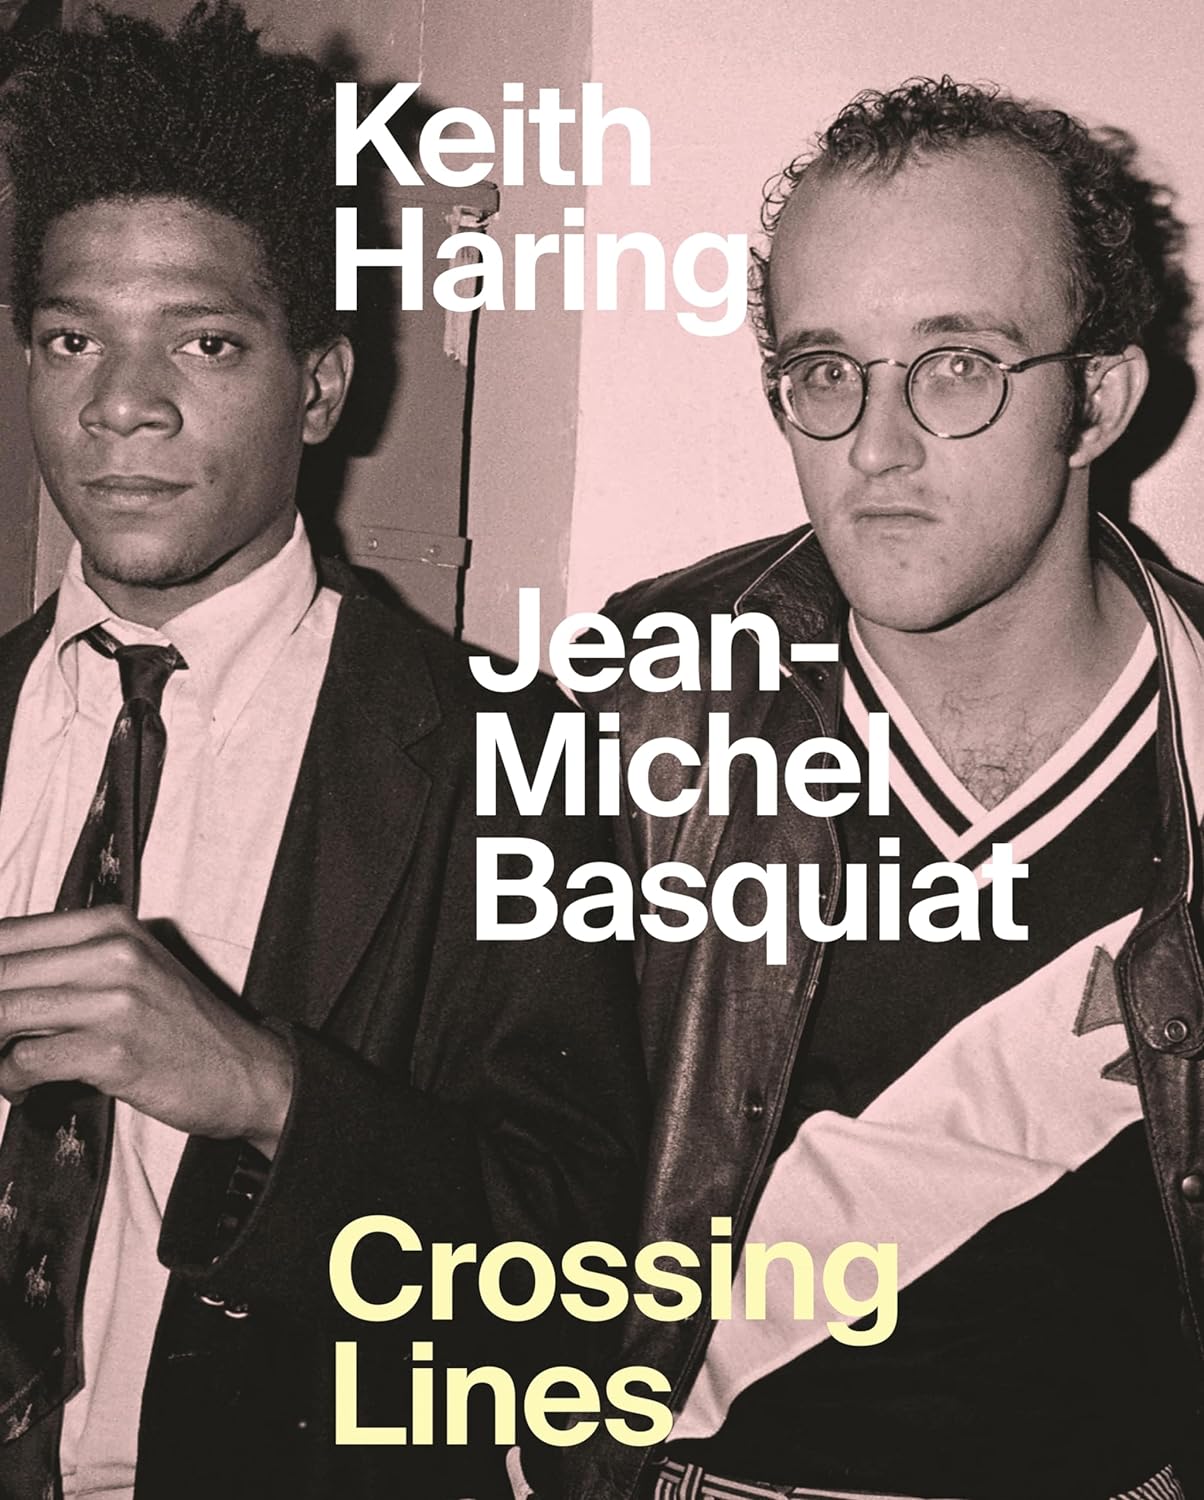 Keith Haring | Jean-Michel Basquiat: Crossing Lines